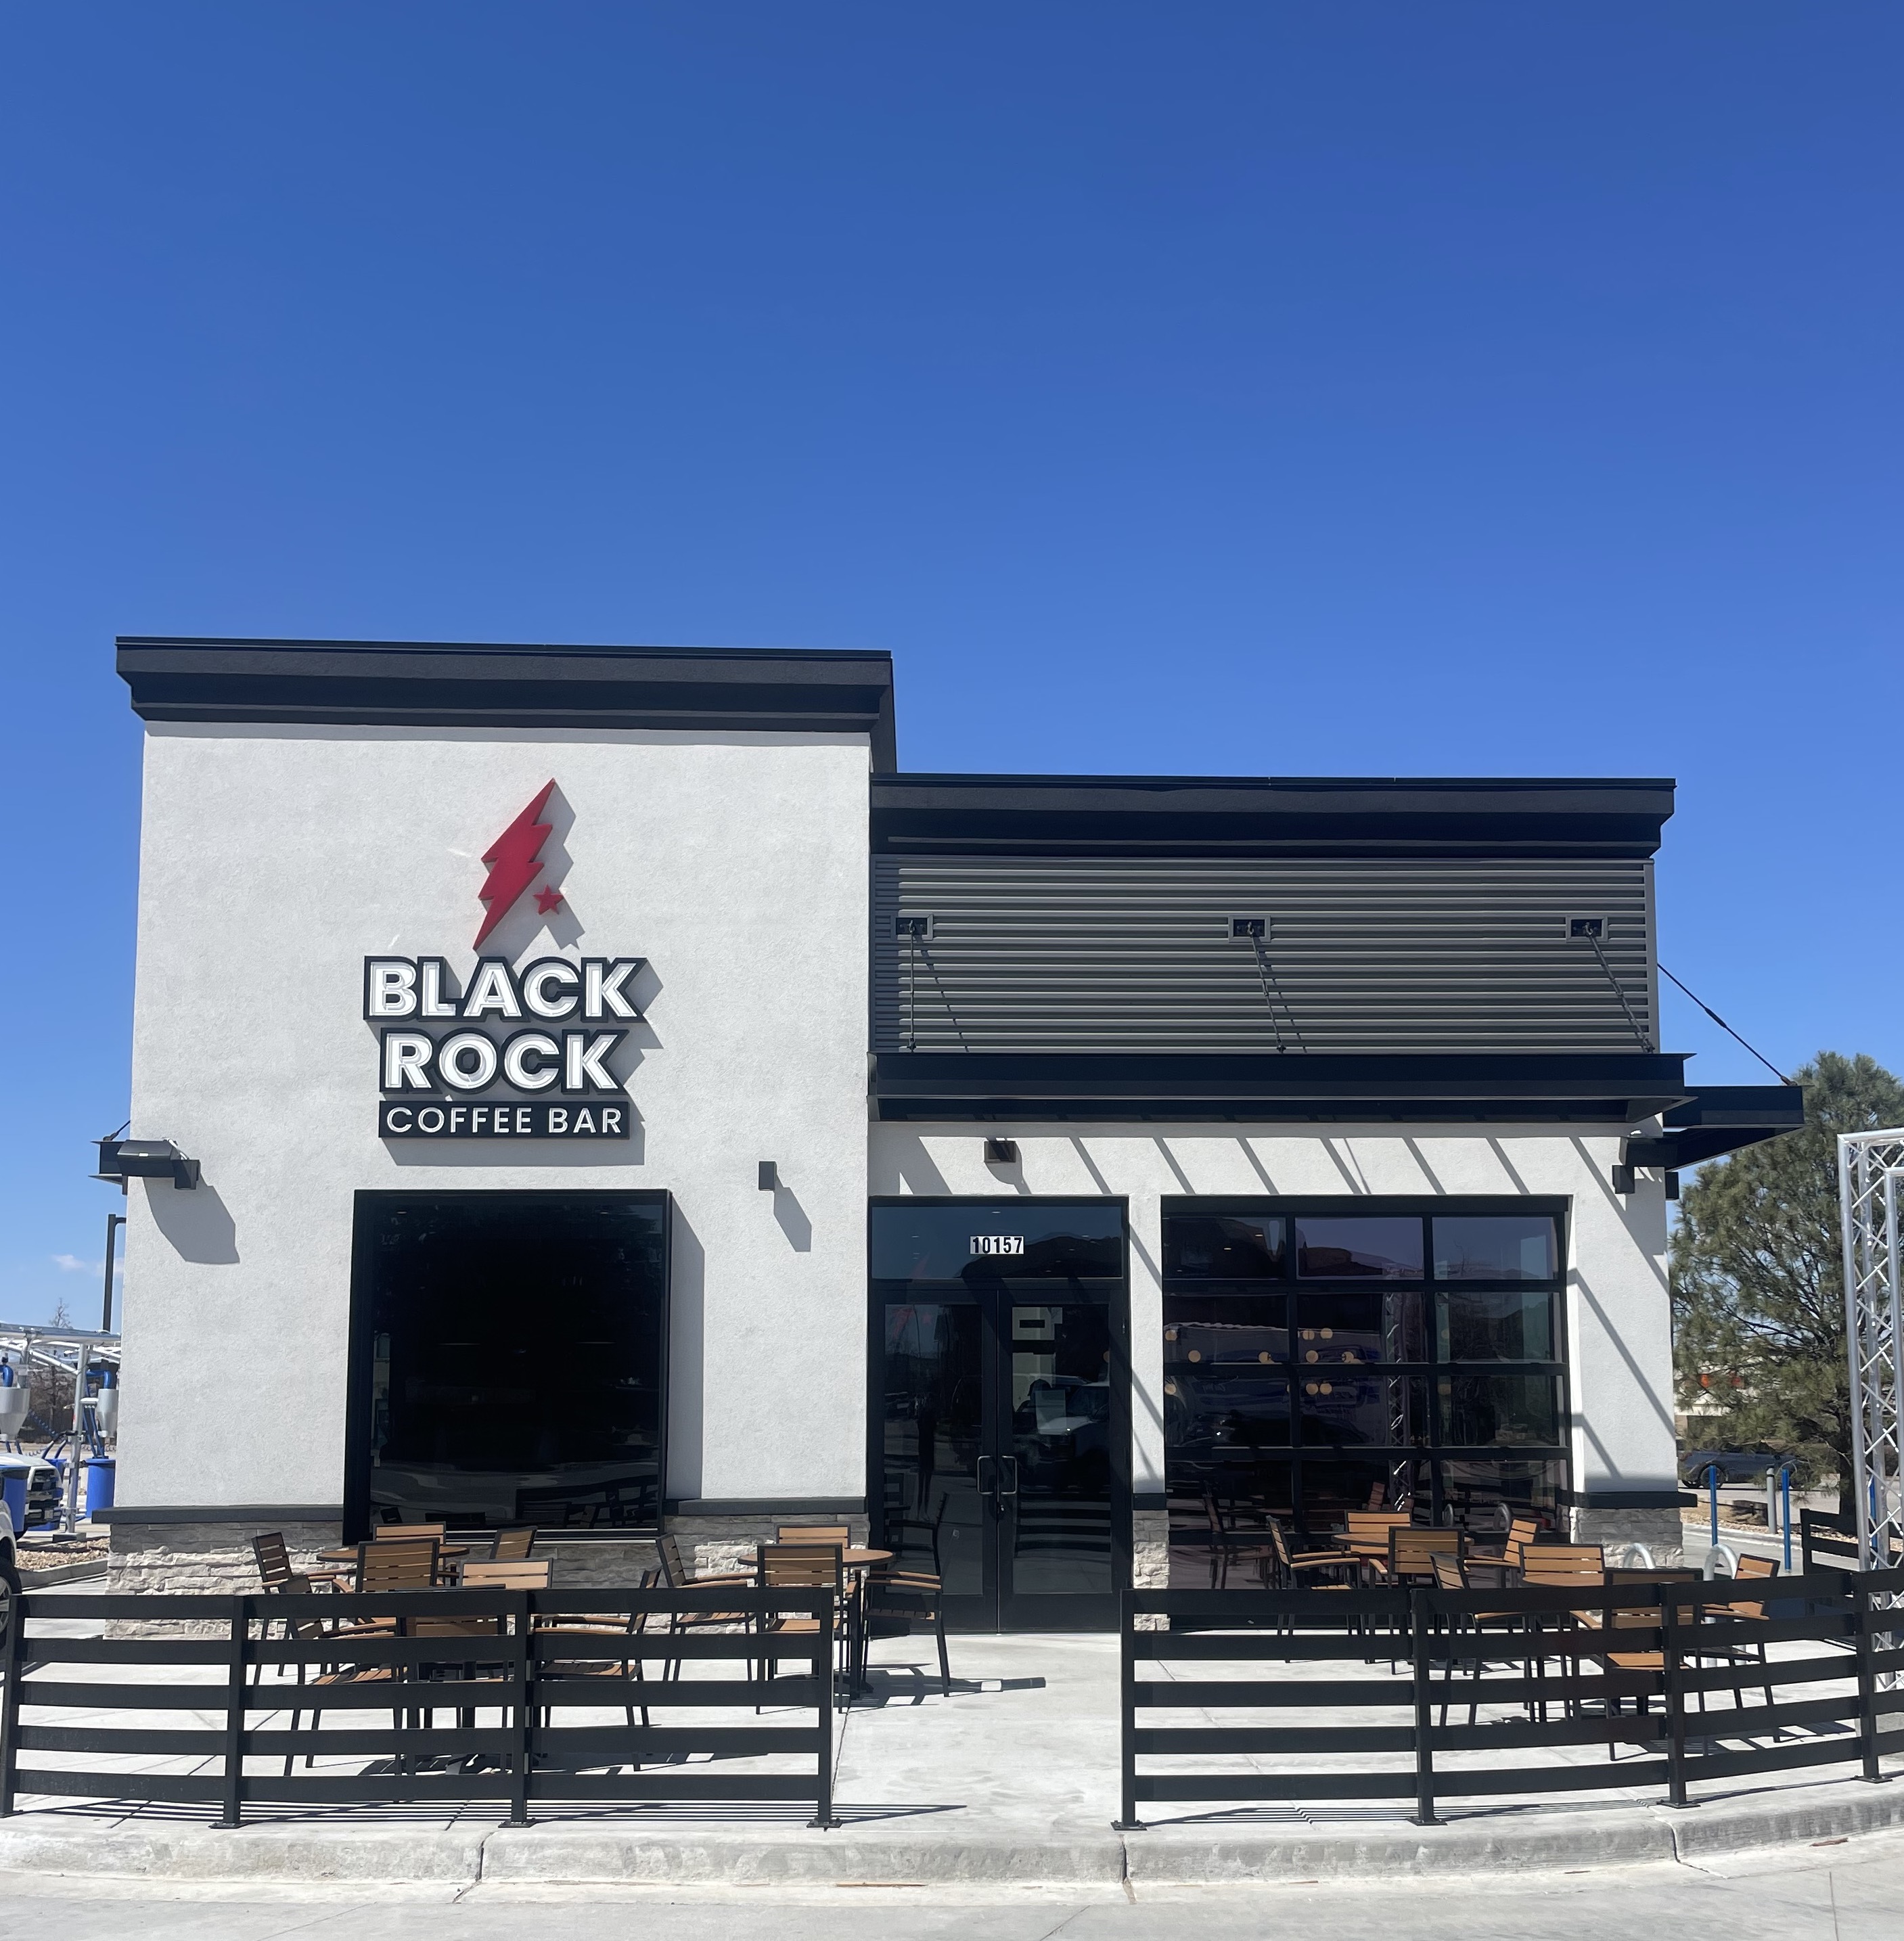 Coffee Lovers Rejoice: Black Rock Coffee Bar to Open New